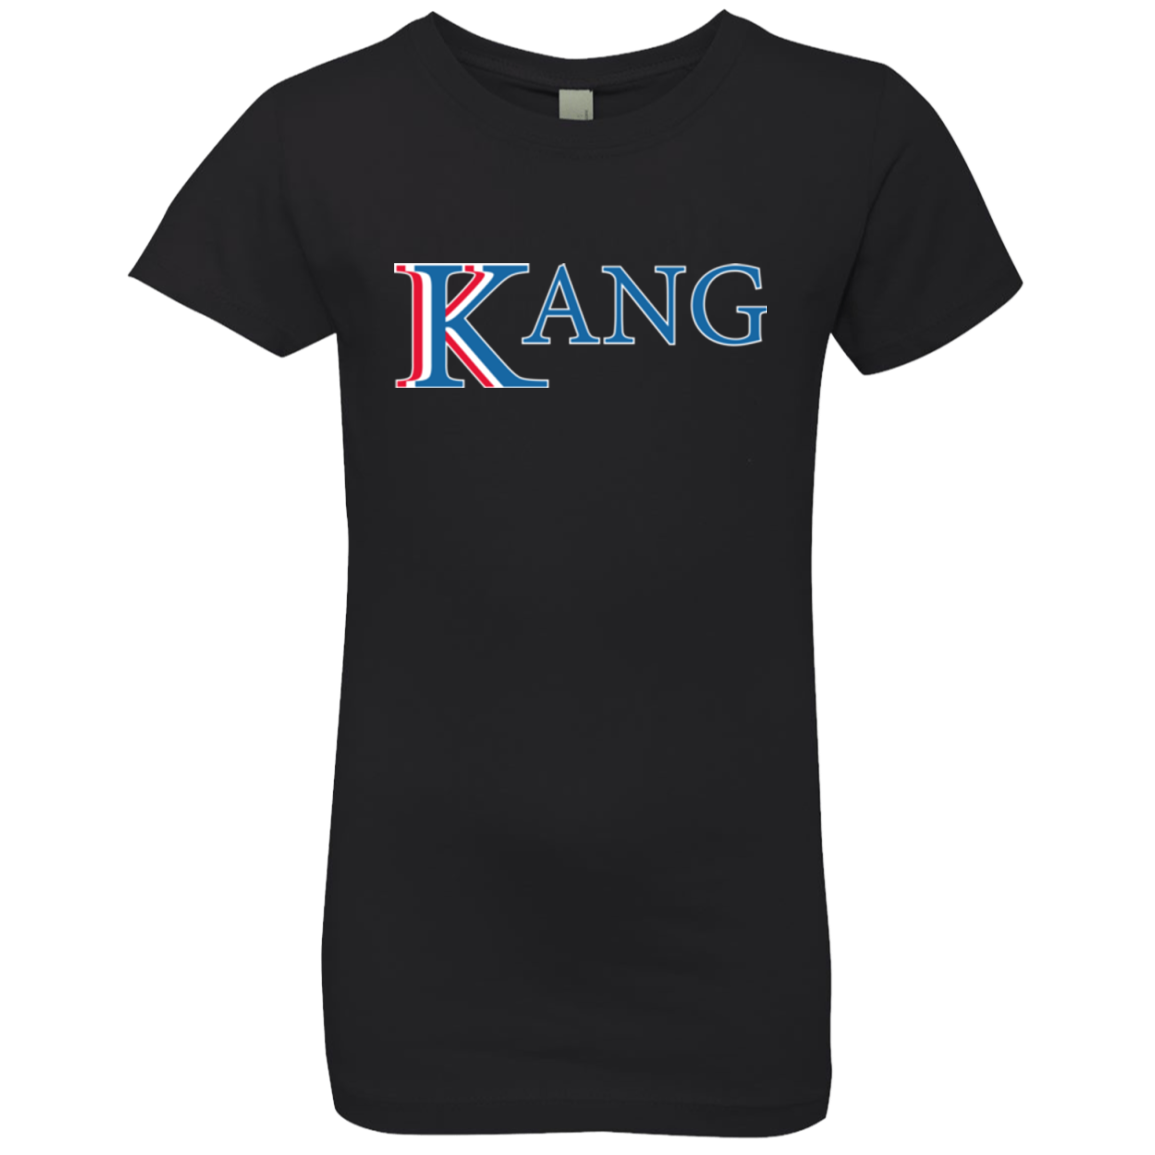 Vote for Kang Girls Premium T-Shirt